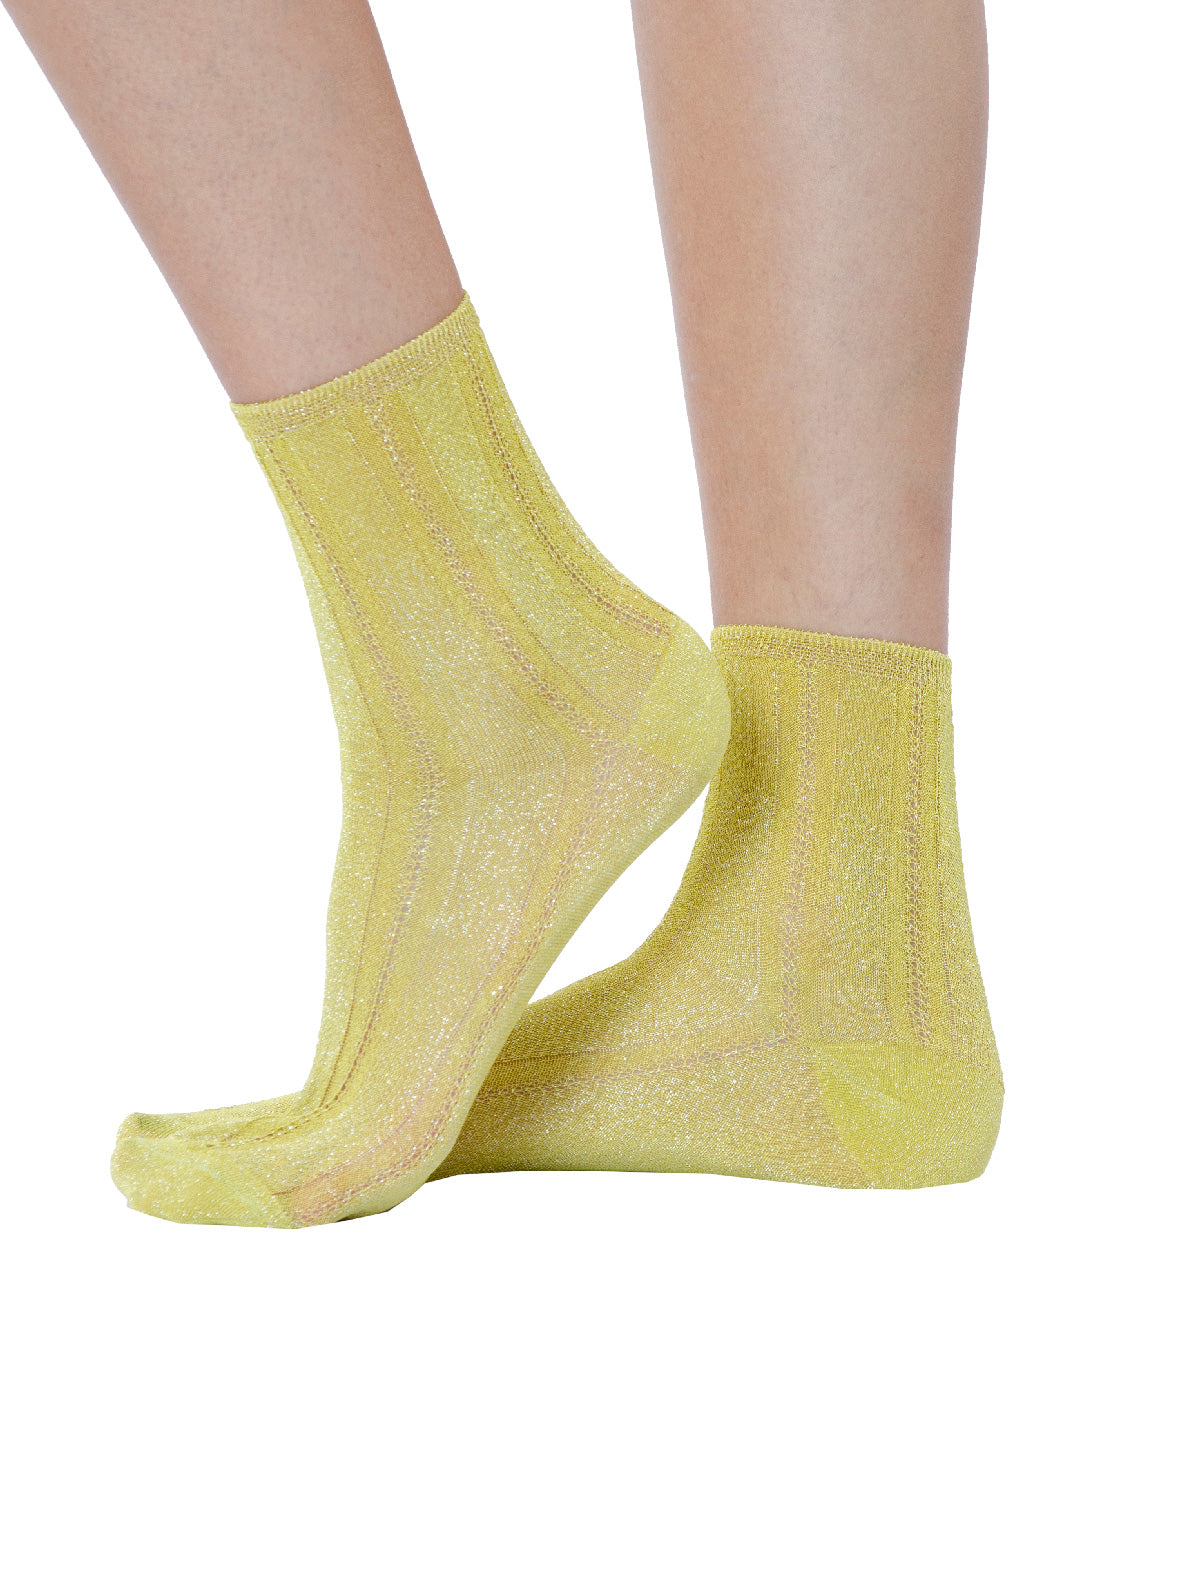 High Milano Short Socks in Cotton and Cedar Lurex